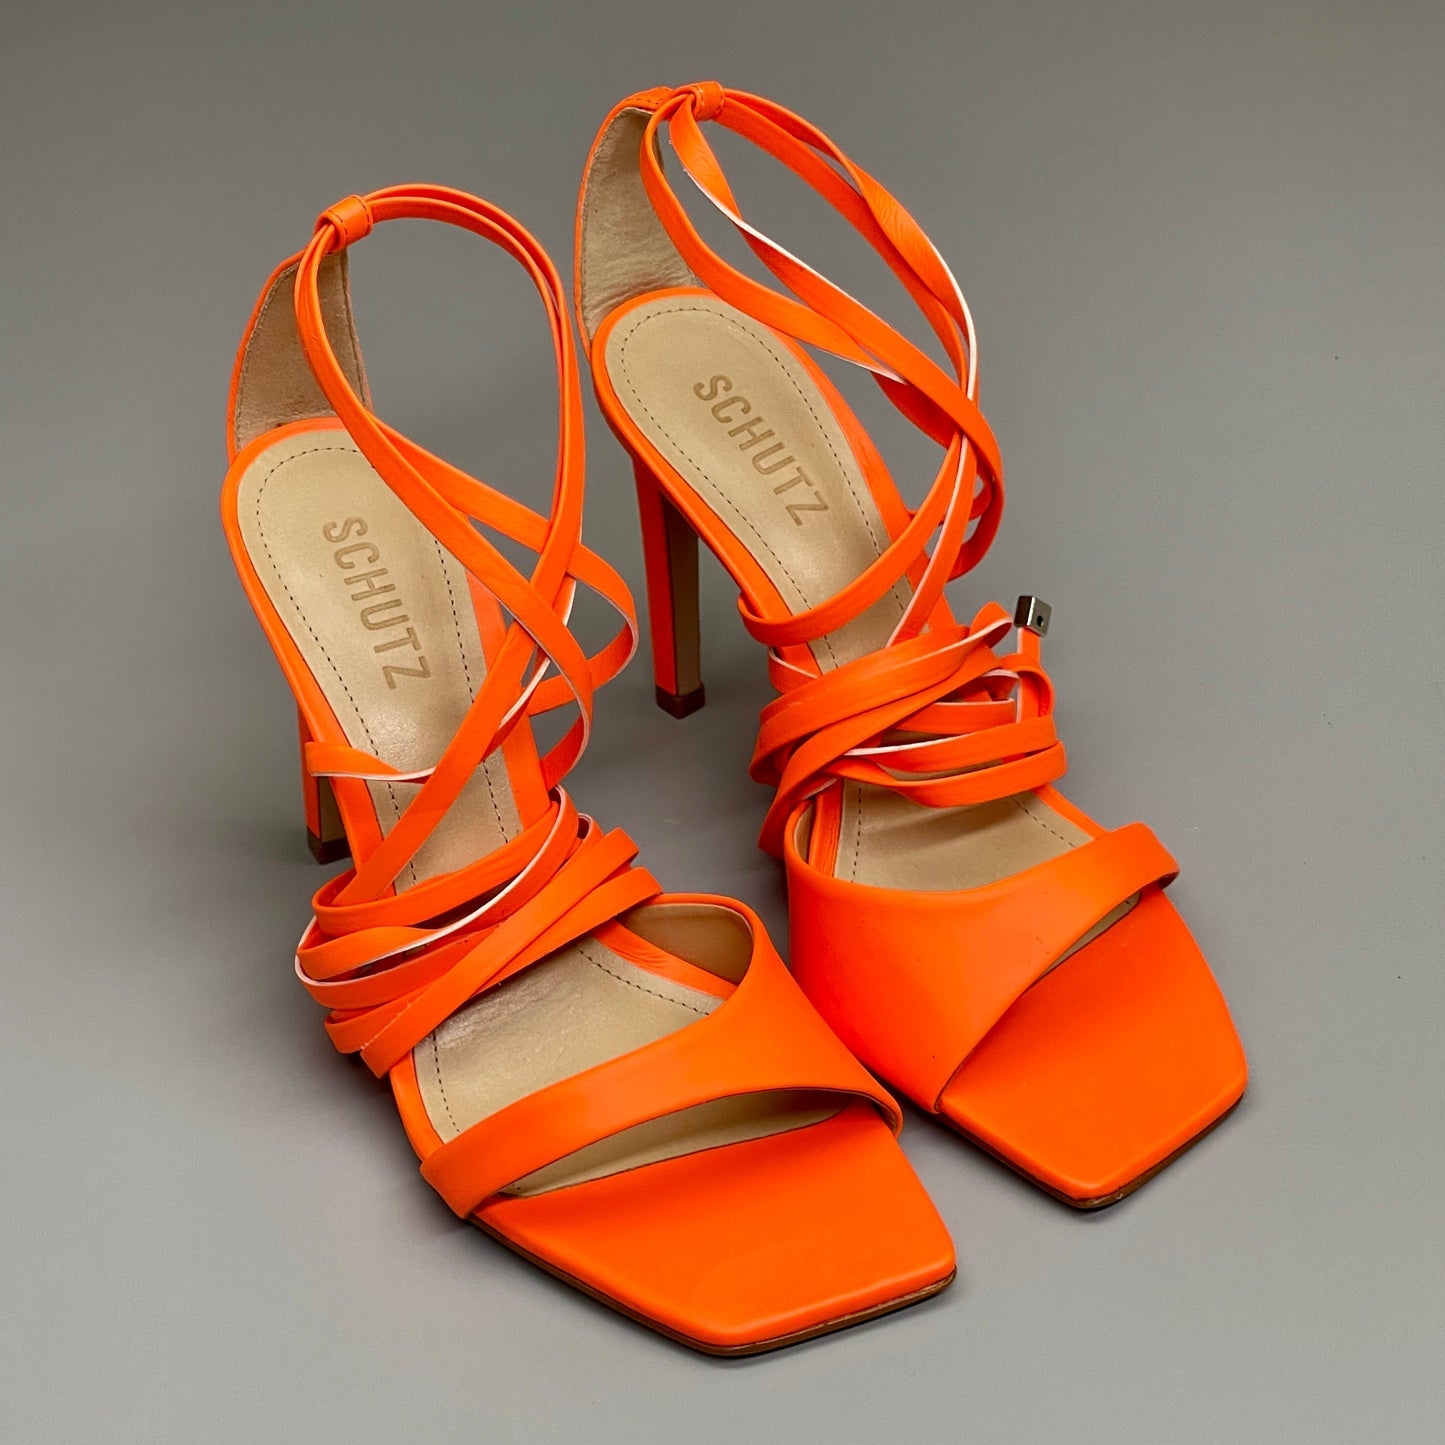 SCHUTZ Bryce Ankle Tie Women's High Heel Leather Strappy Sandal Acid Orange Sz 9.5 (New)